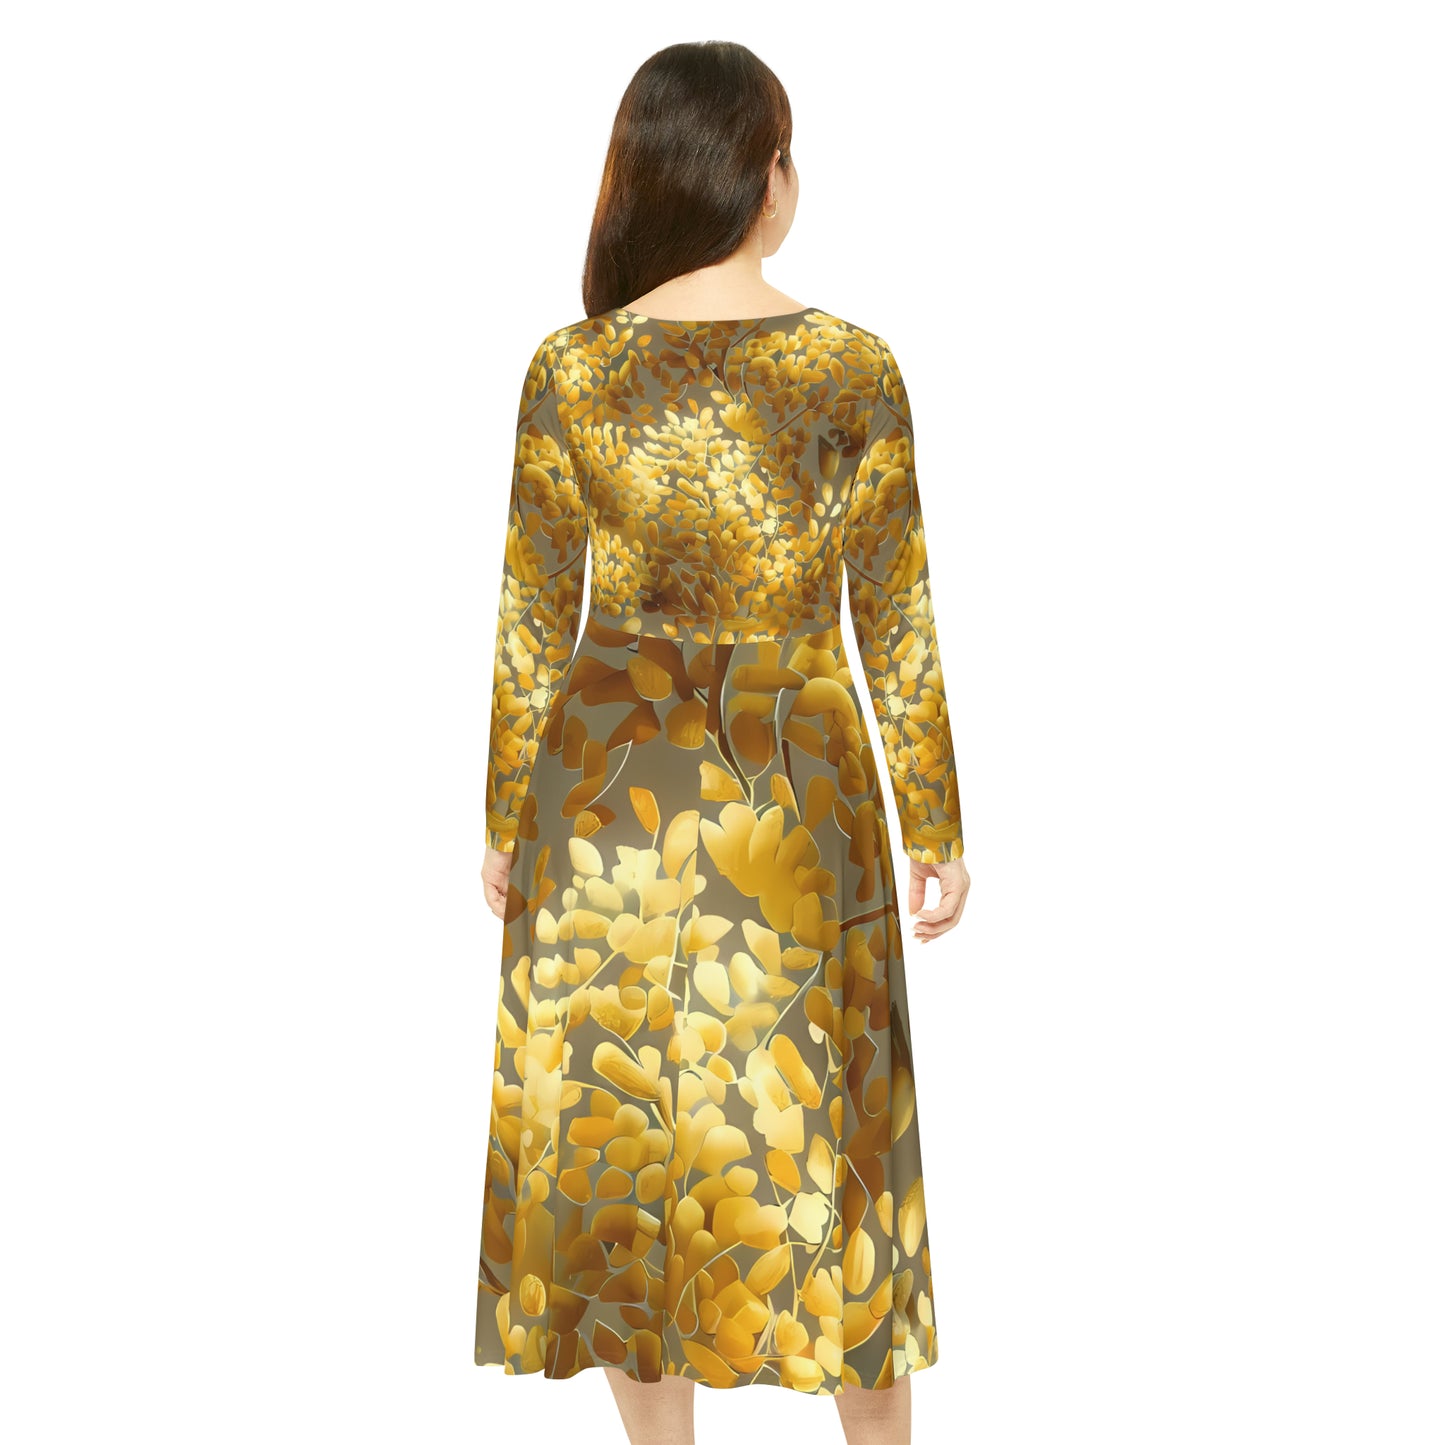 Fashion Women's Long Sleeve Dance Dress - Absolute Greatest Golden Floral Dance Dress for Summer